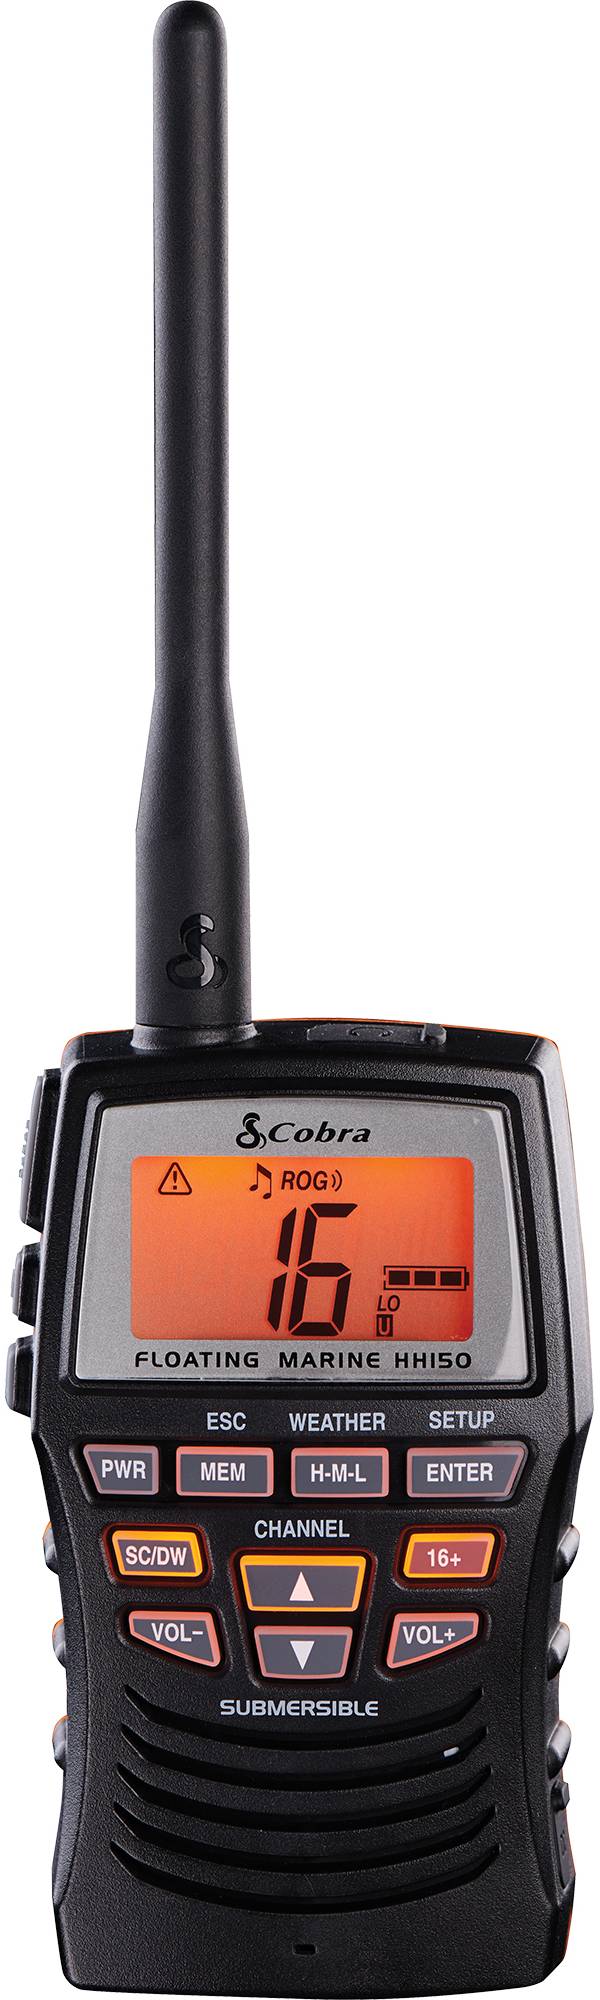 Cobra MR HH150 FLT Handheld Floating VHF Radio product image